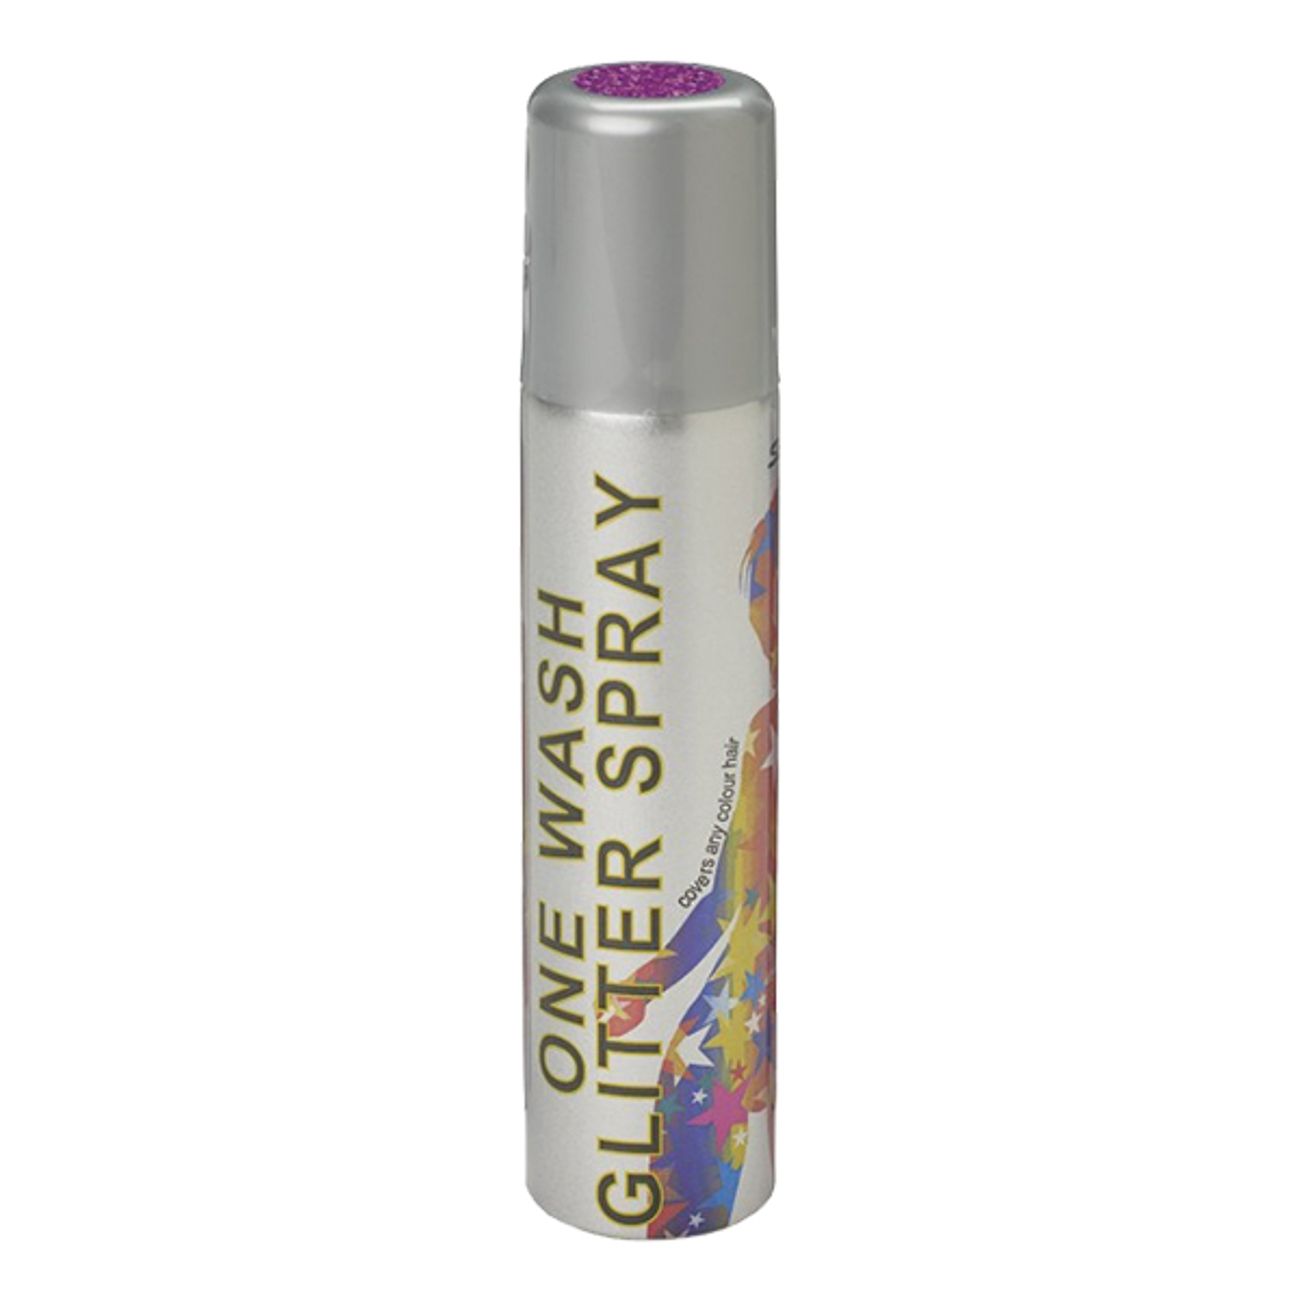 stargazer-glitterspray-6